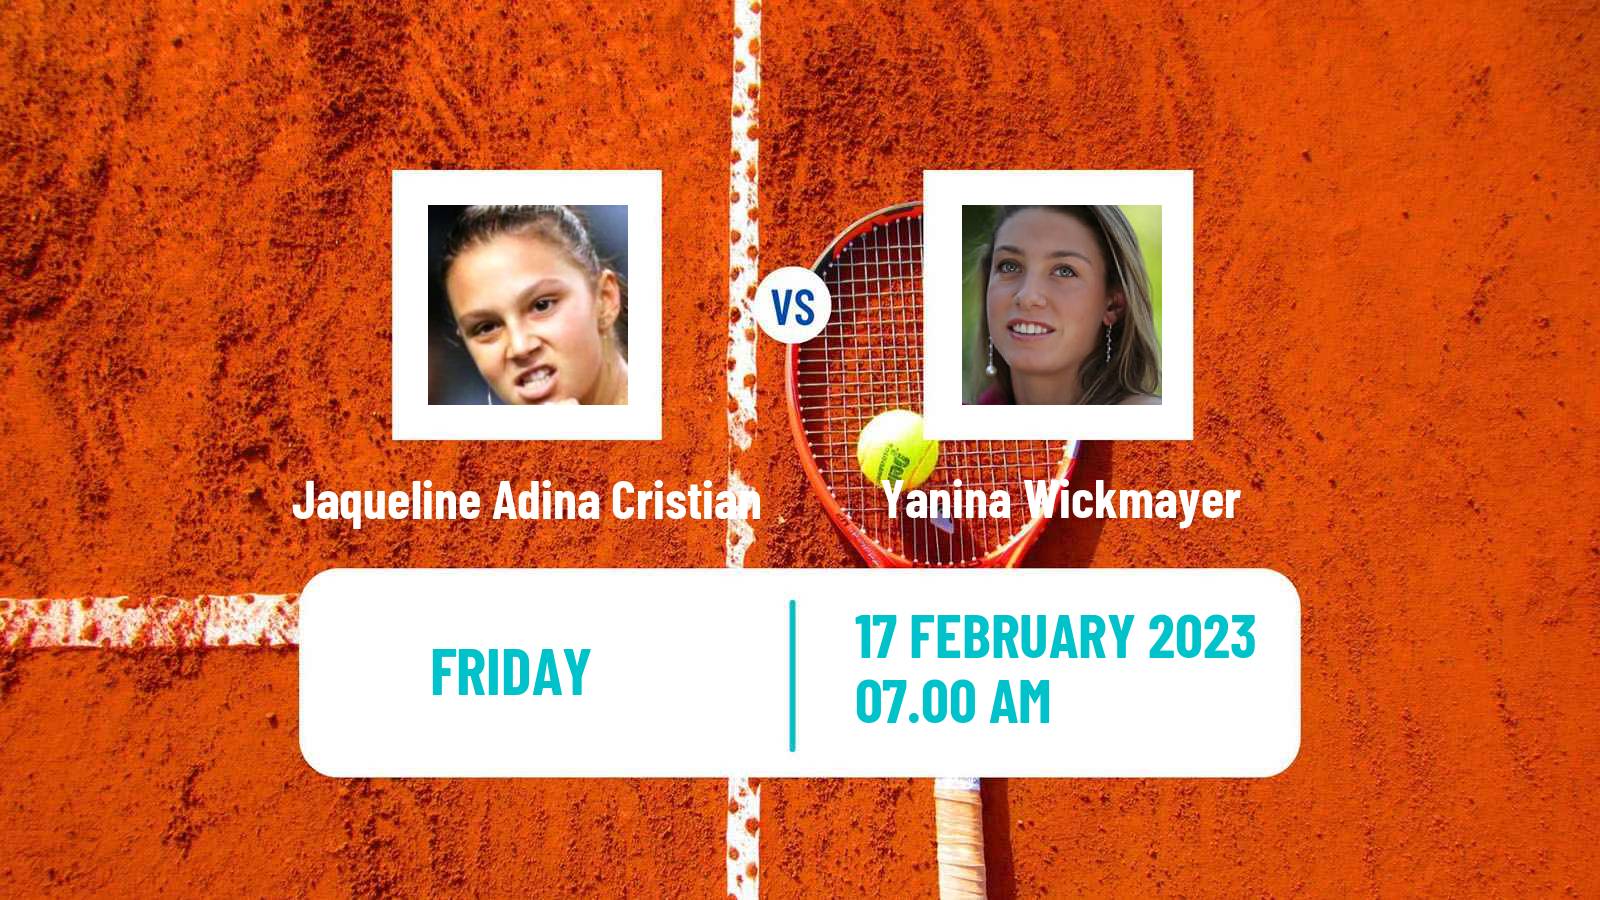 Tennis ITF Tournaments Jaqueline Adina Cristian - Yanina Wickmayer